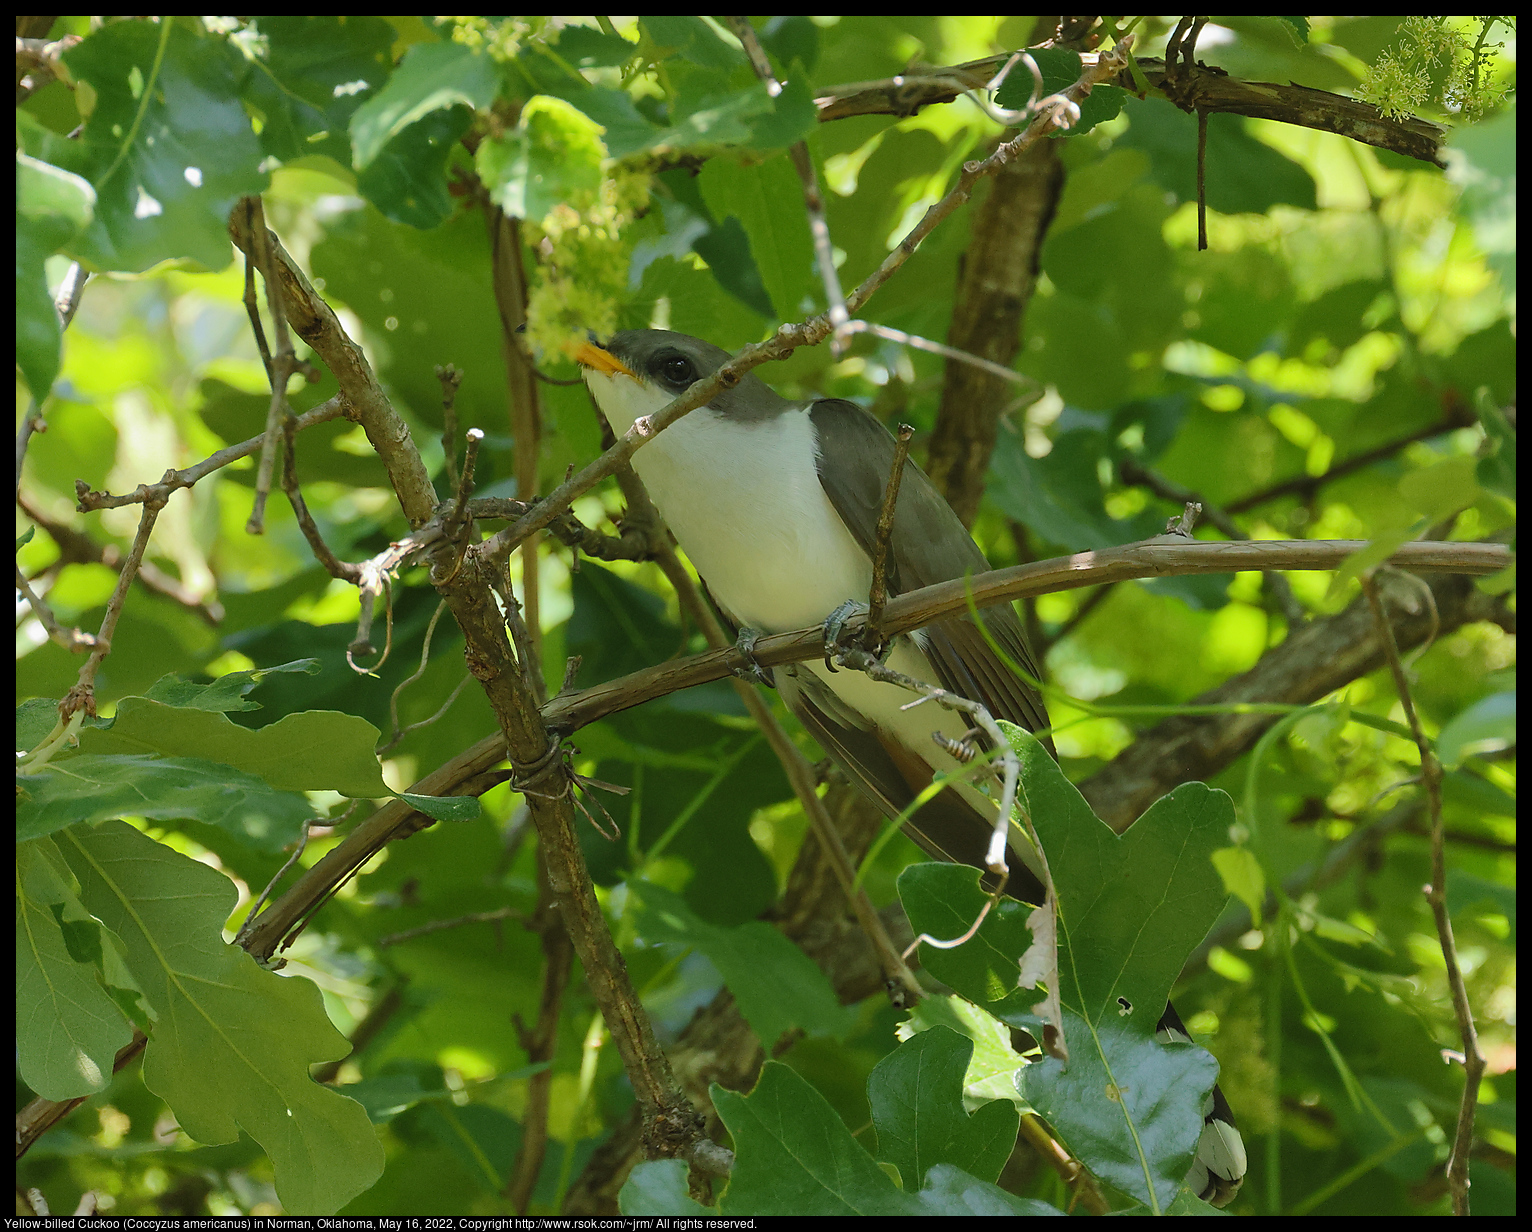 Yellow-billed Cuckoo (Coccyzus americanus) in Norman, Oklahoma, May 16, 2022